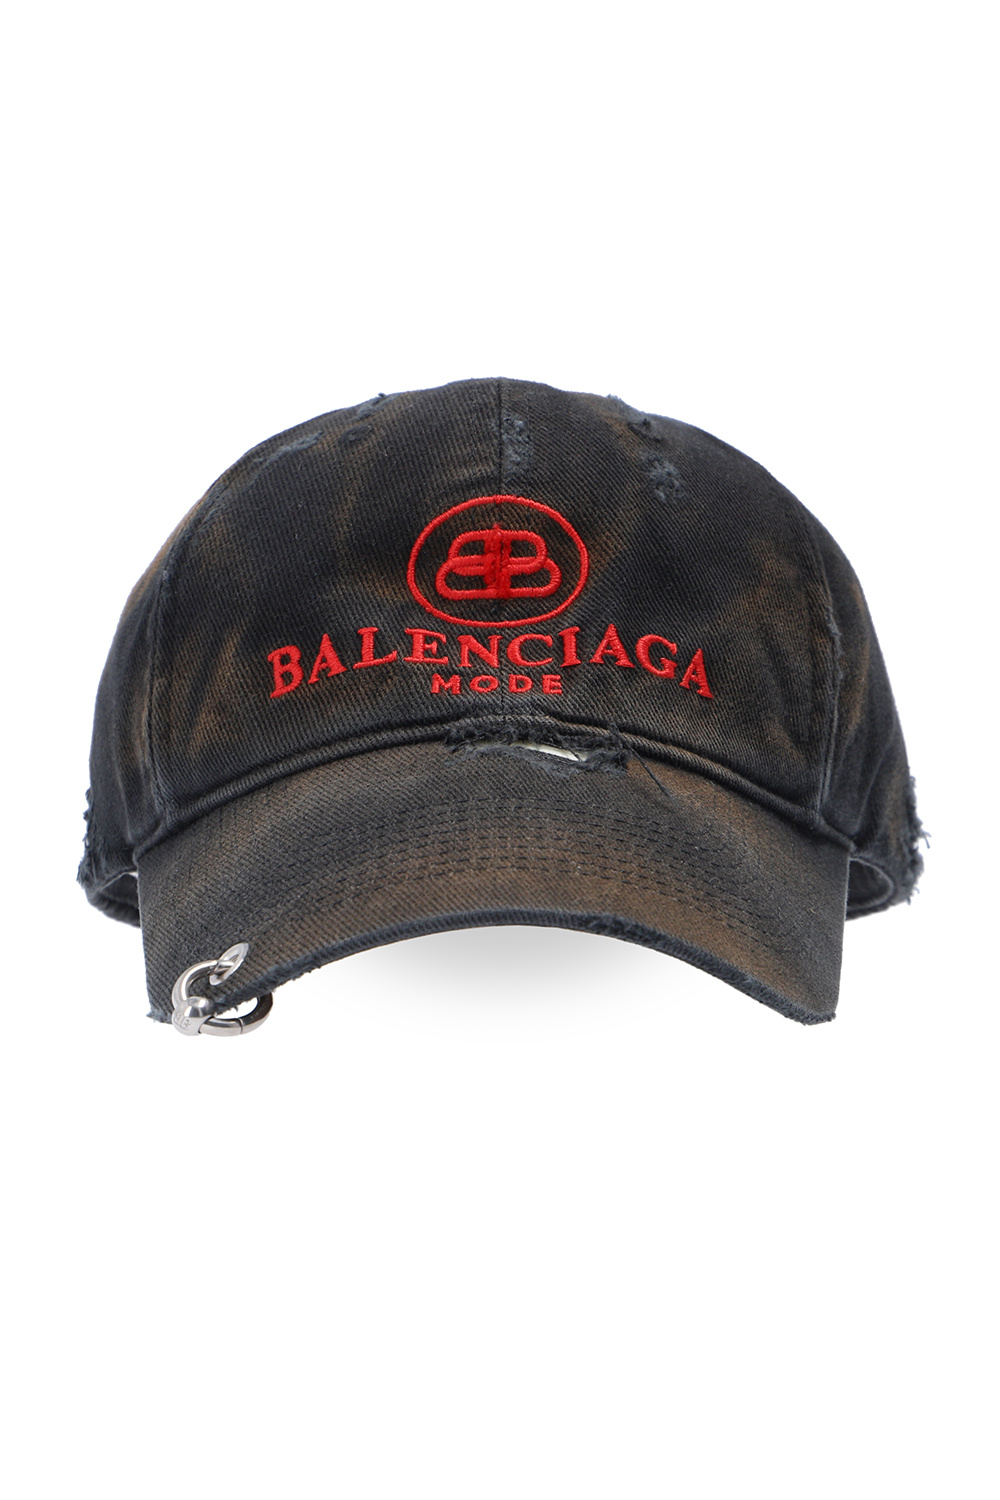 NWT Balenciaga Baseball Cap Red Adjustable Size L 59  eBay